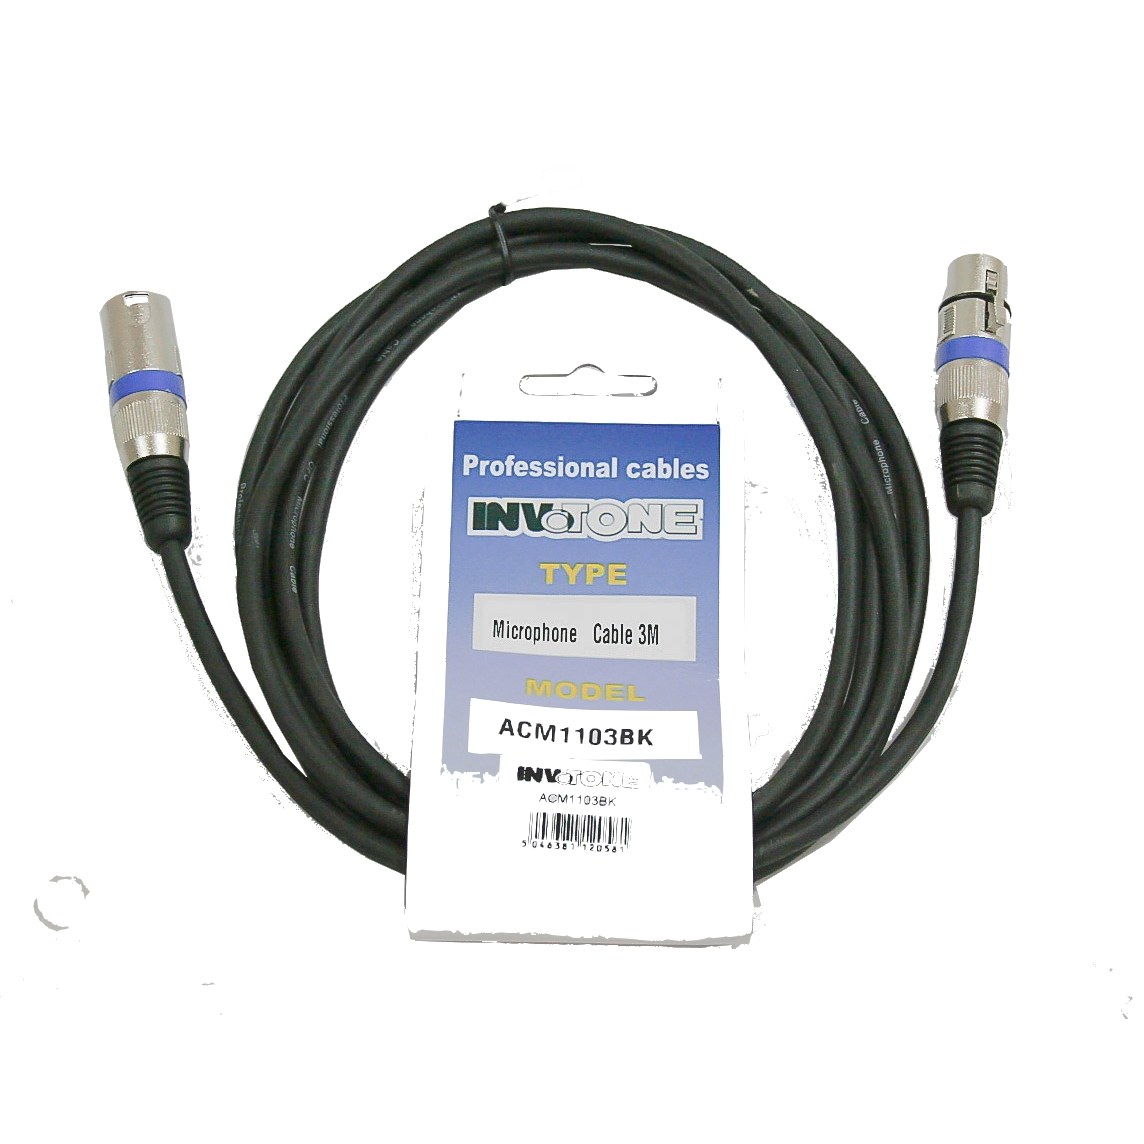 Invotone ACM1110BK - Микрофонный кабель, XLR <-> XLR длина 10 м